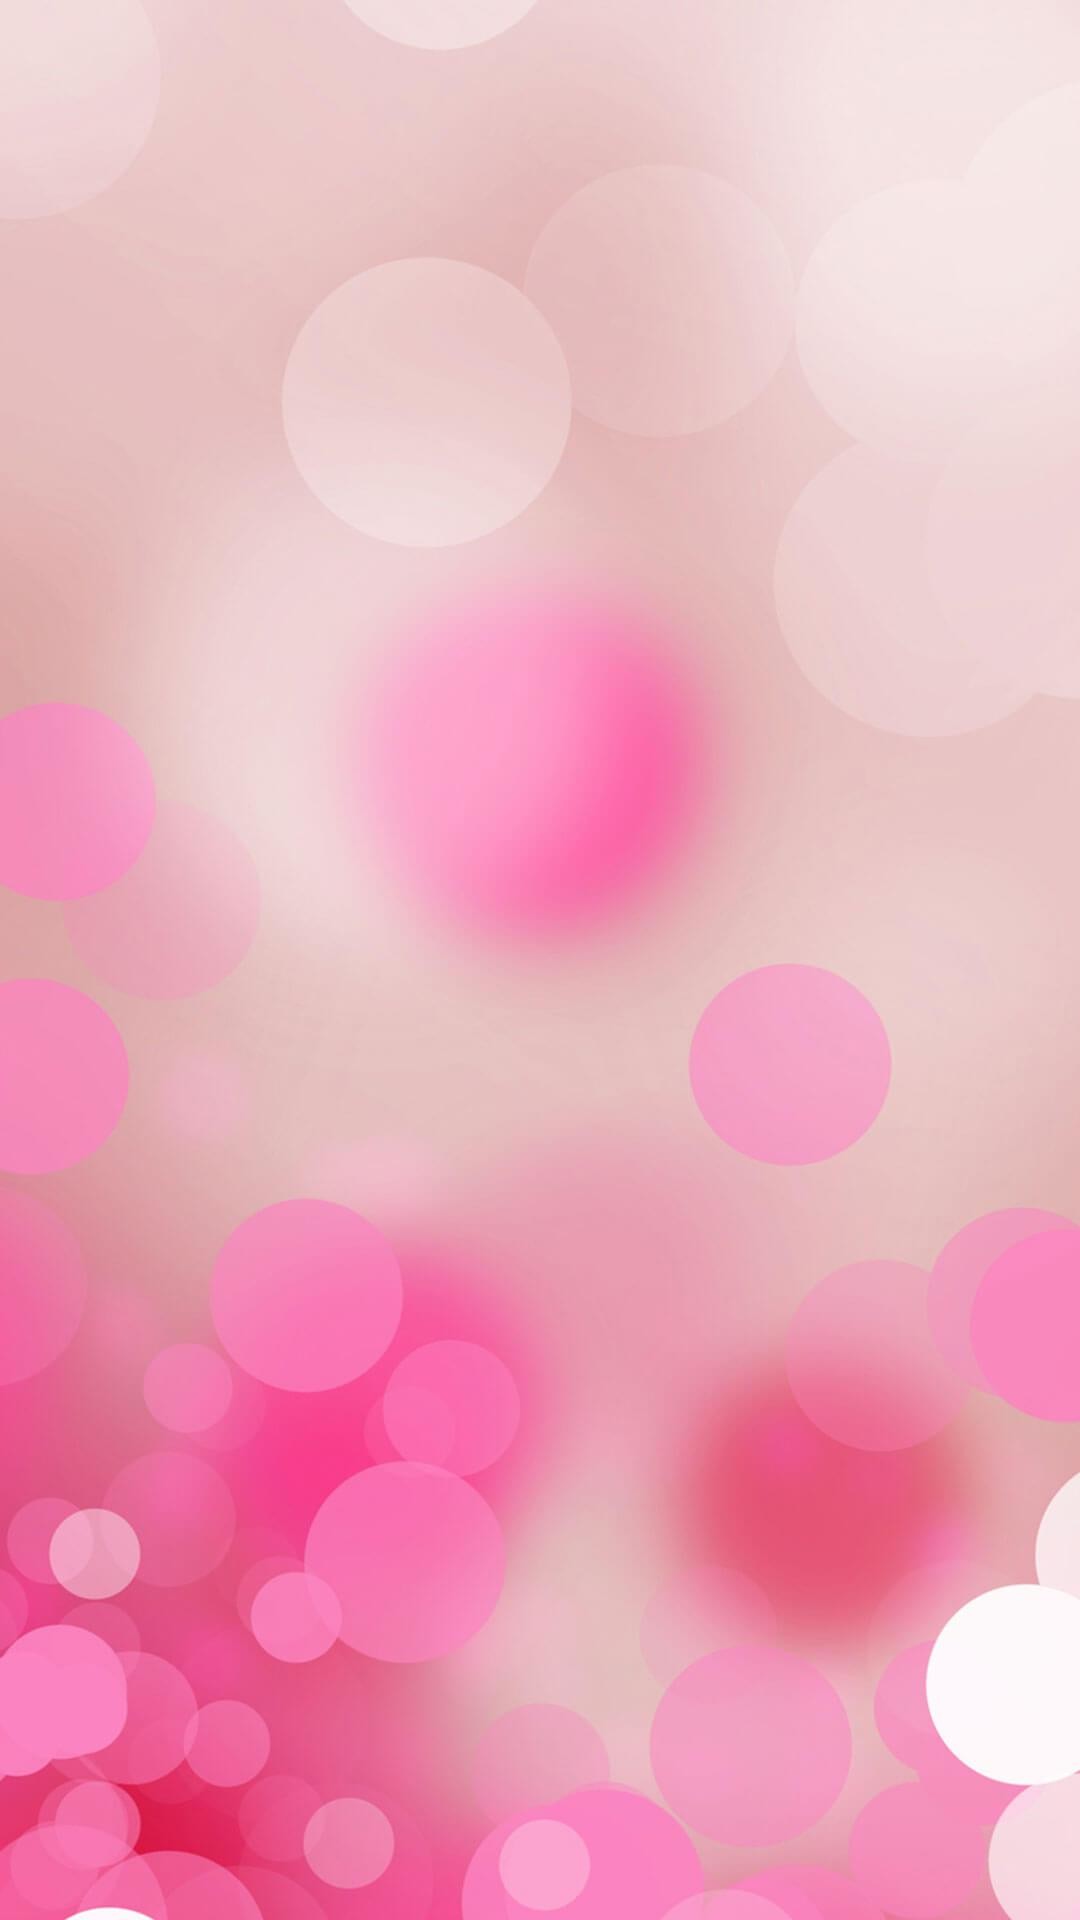 1080x1920 ... cute - Cool Pink Iphone 6 Wallpaper Tumblr Hd. Download